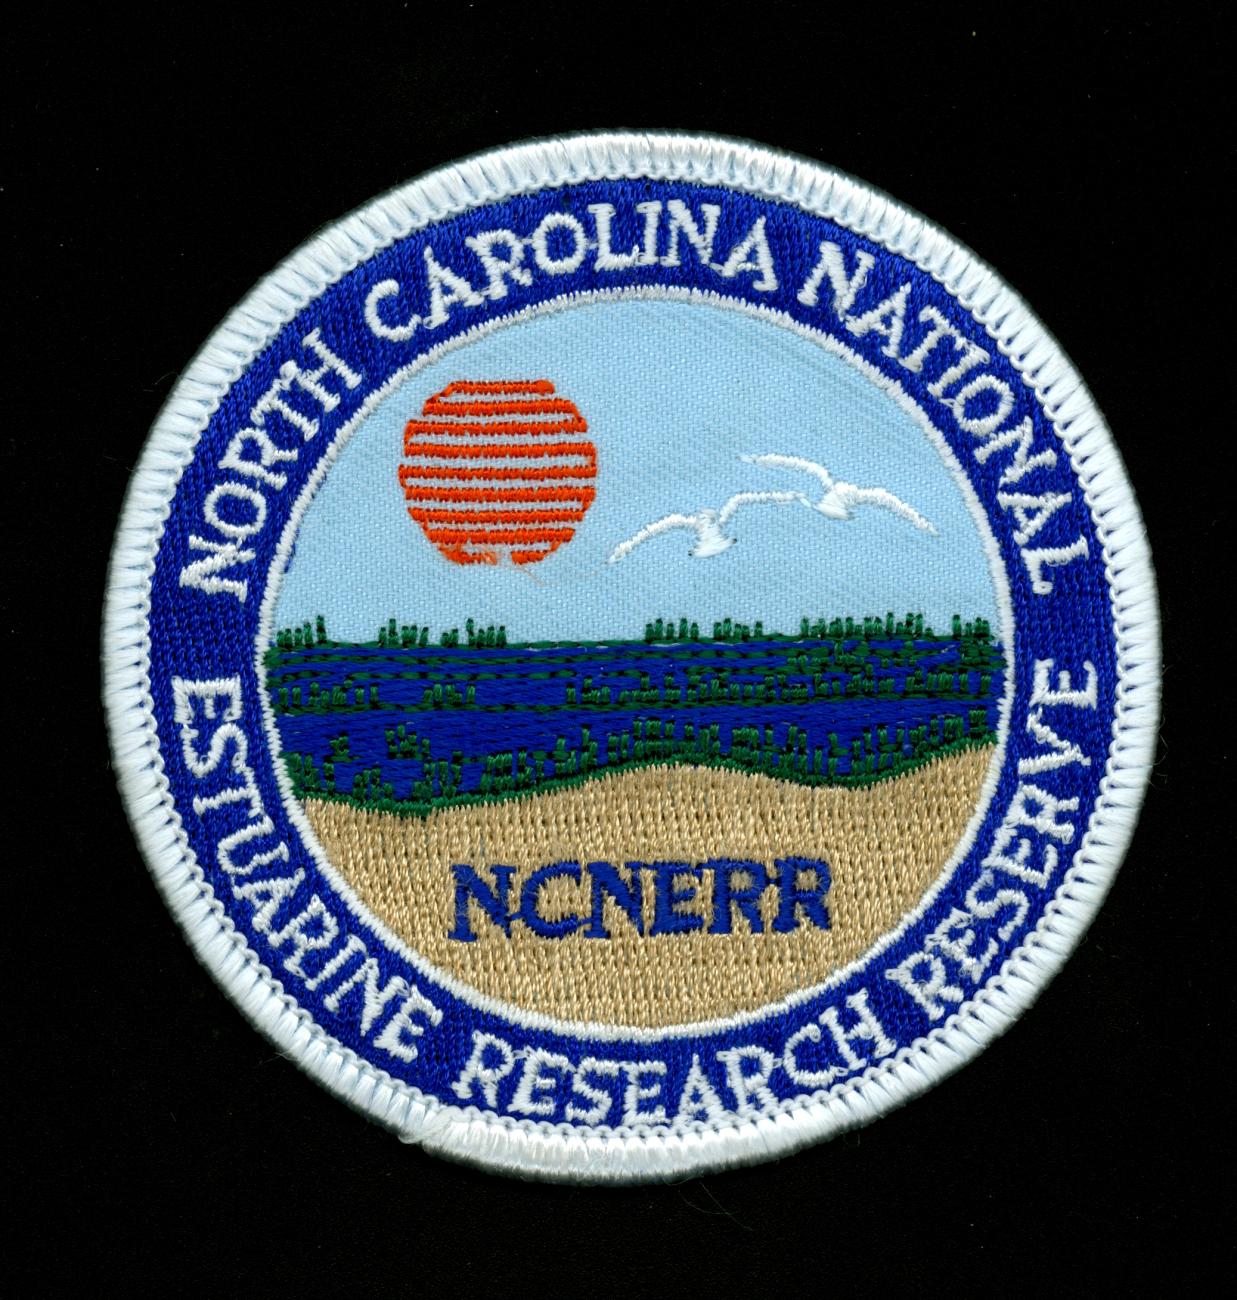 Patch commemorating NOAA's North Carolina National Estuarine Research Reserve